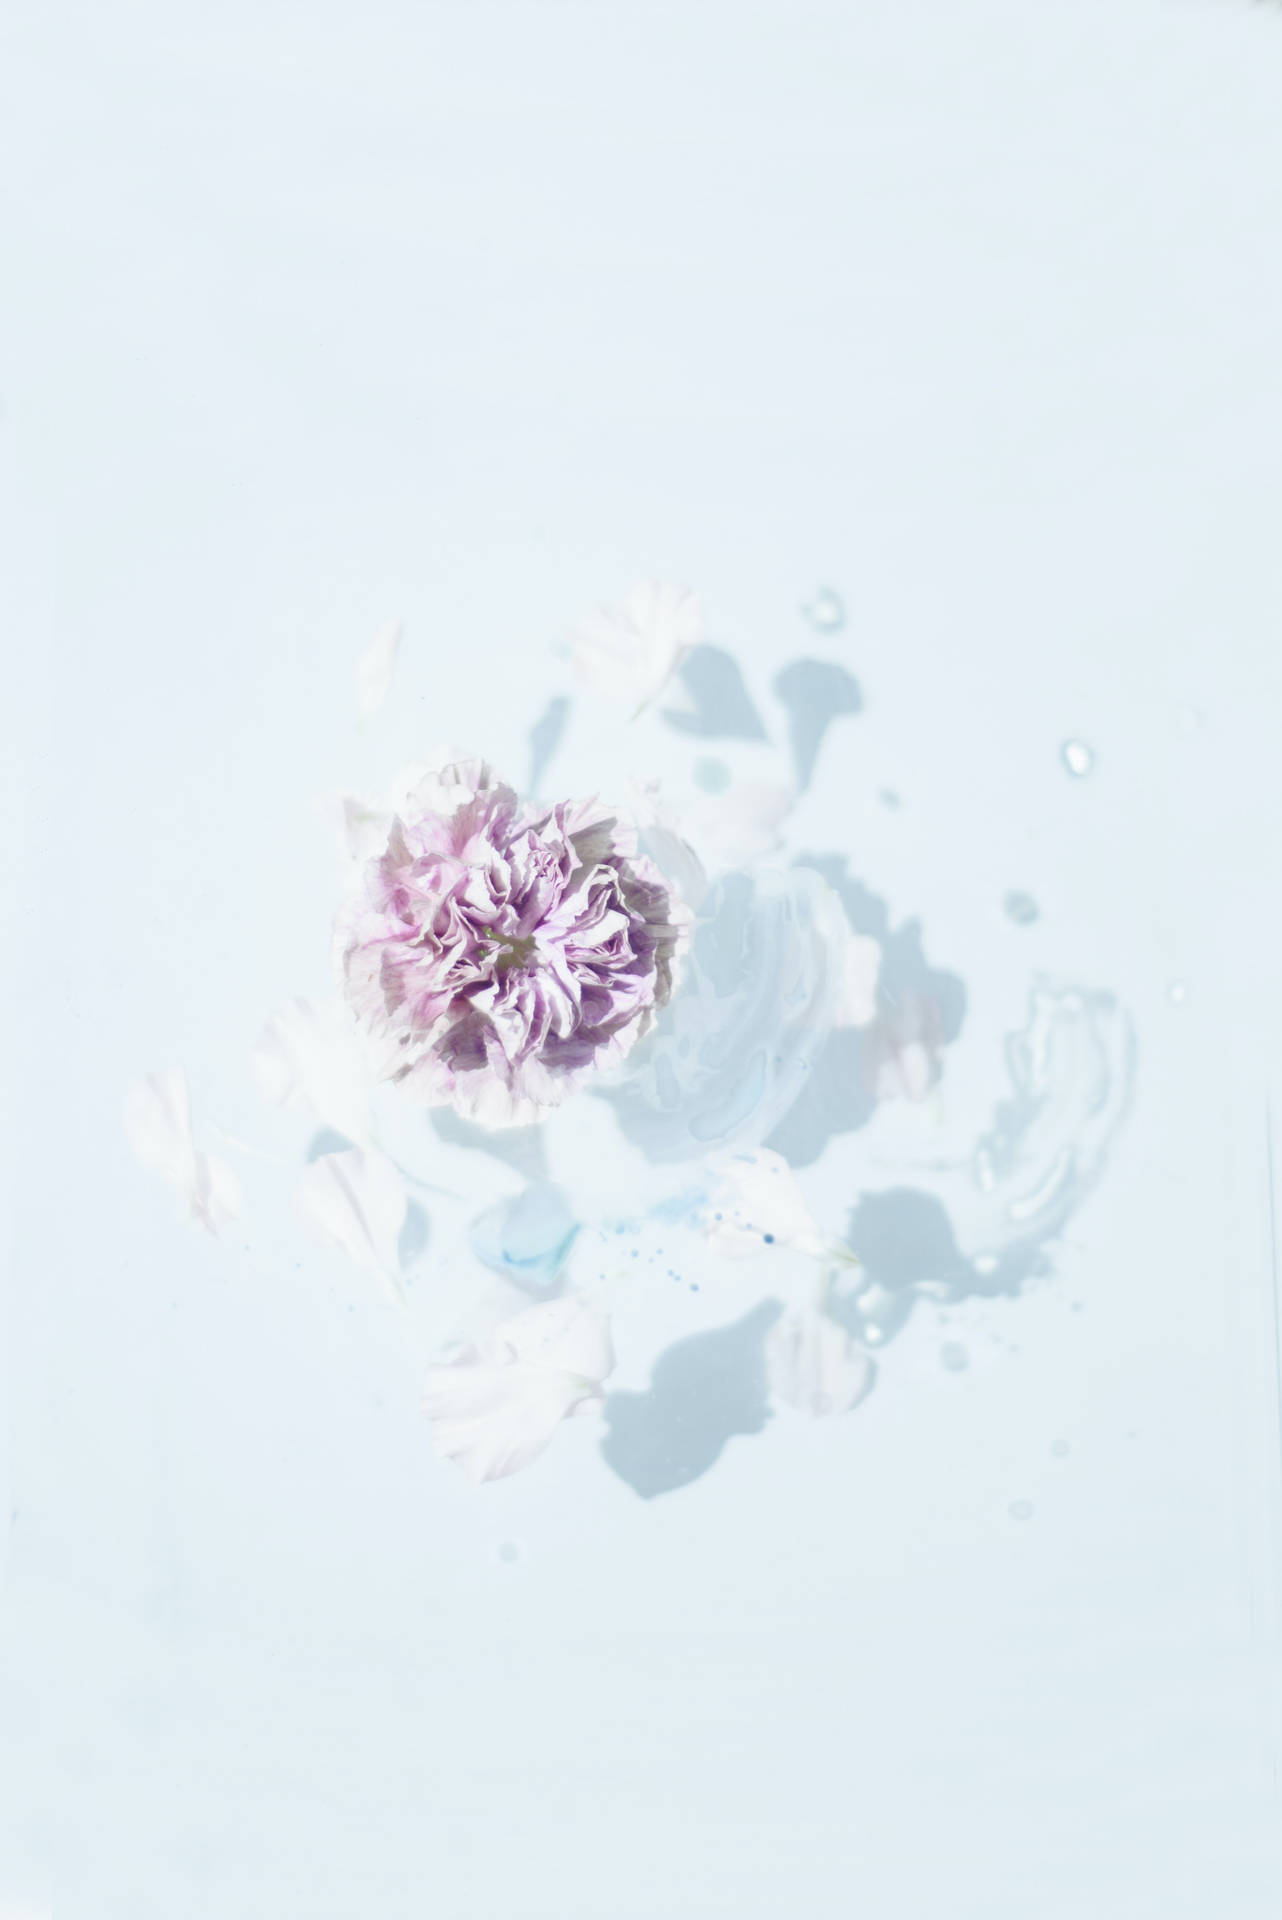 4k IPhone Flower On Water Wallpaper